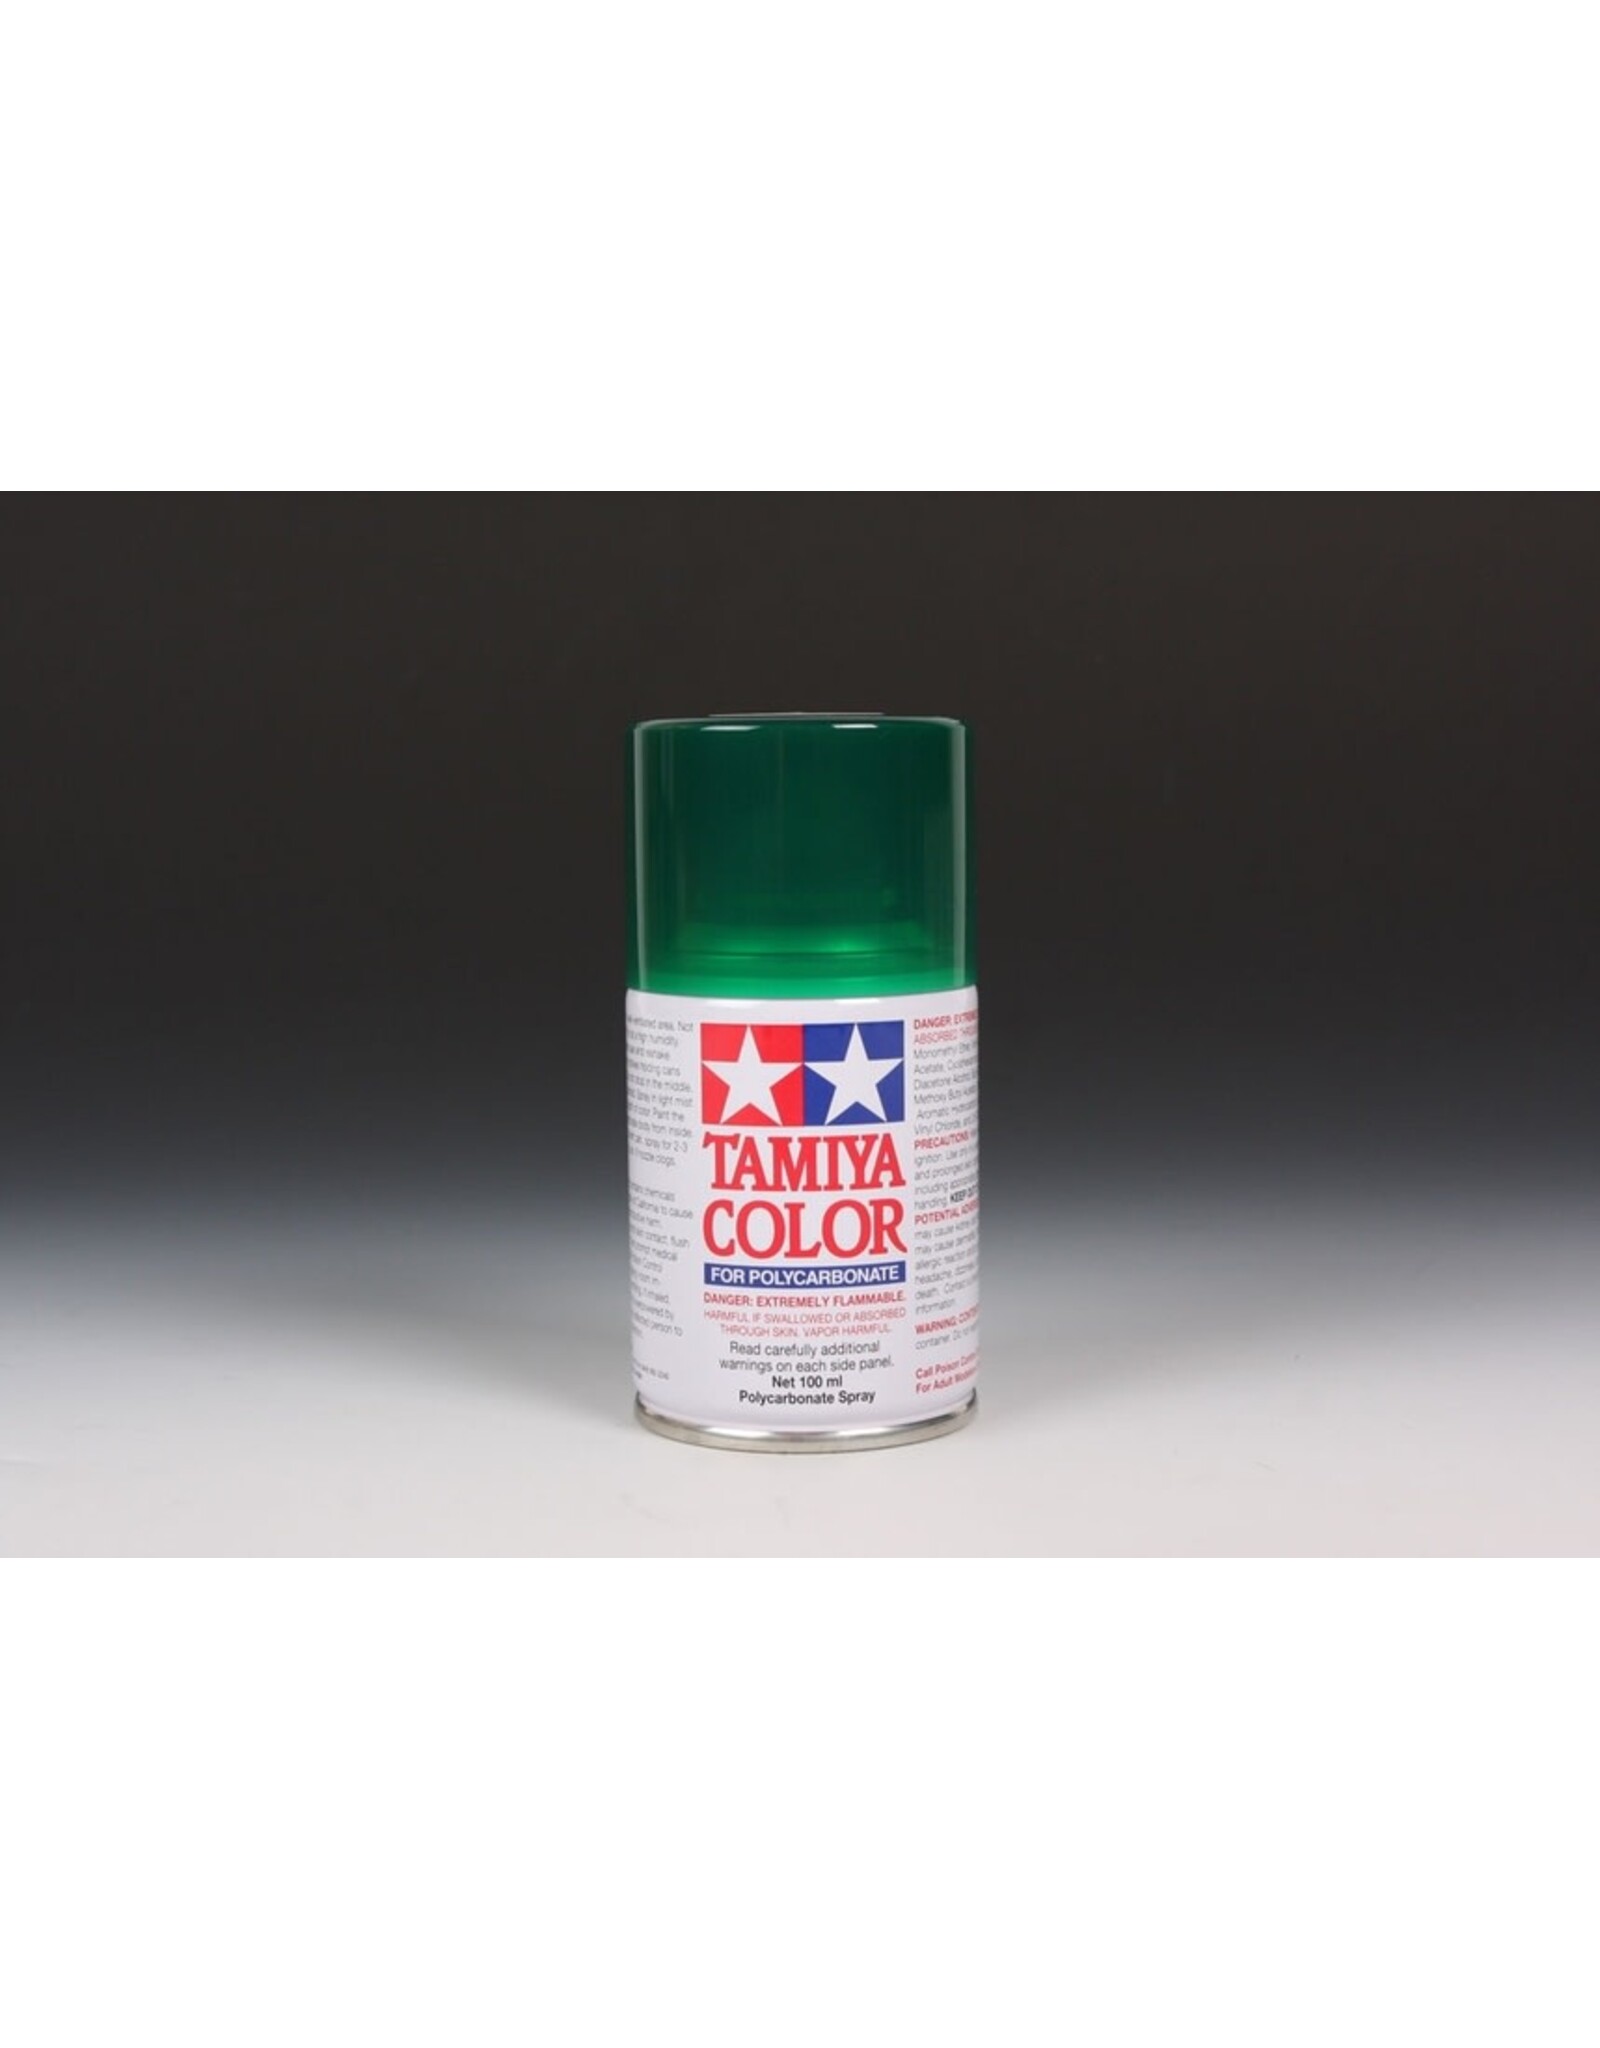 Tamiya PS-44 Translucent Green Spray Paint, 100ml Spray Can